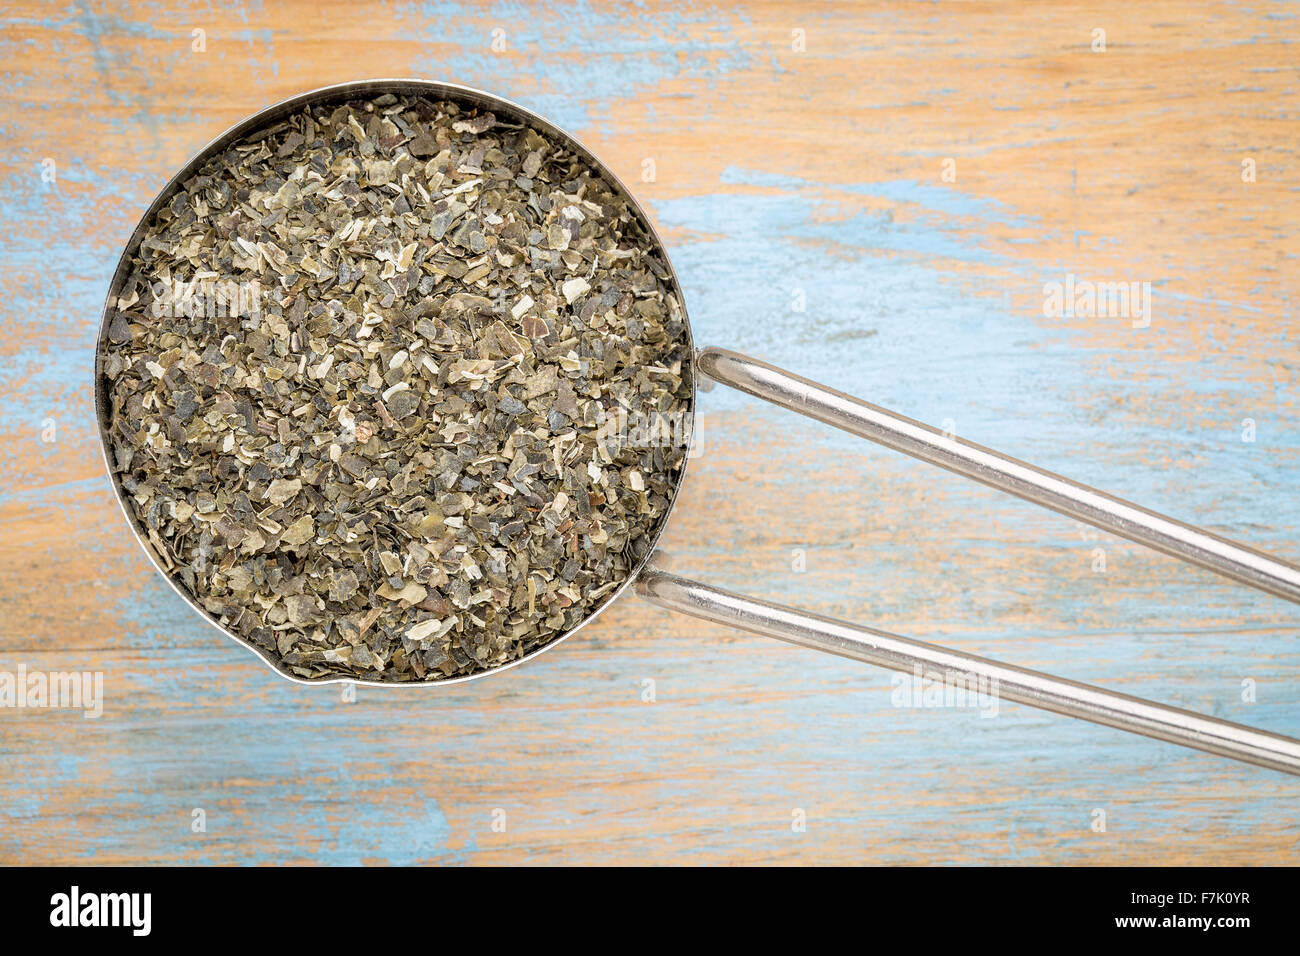 dried wakame seaweed - top view of a metal measuring scoop against painted wood Stock Photo